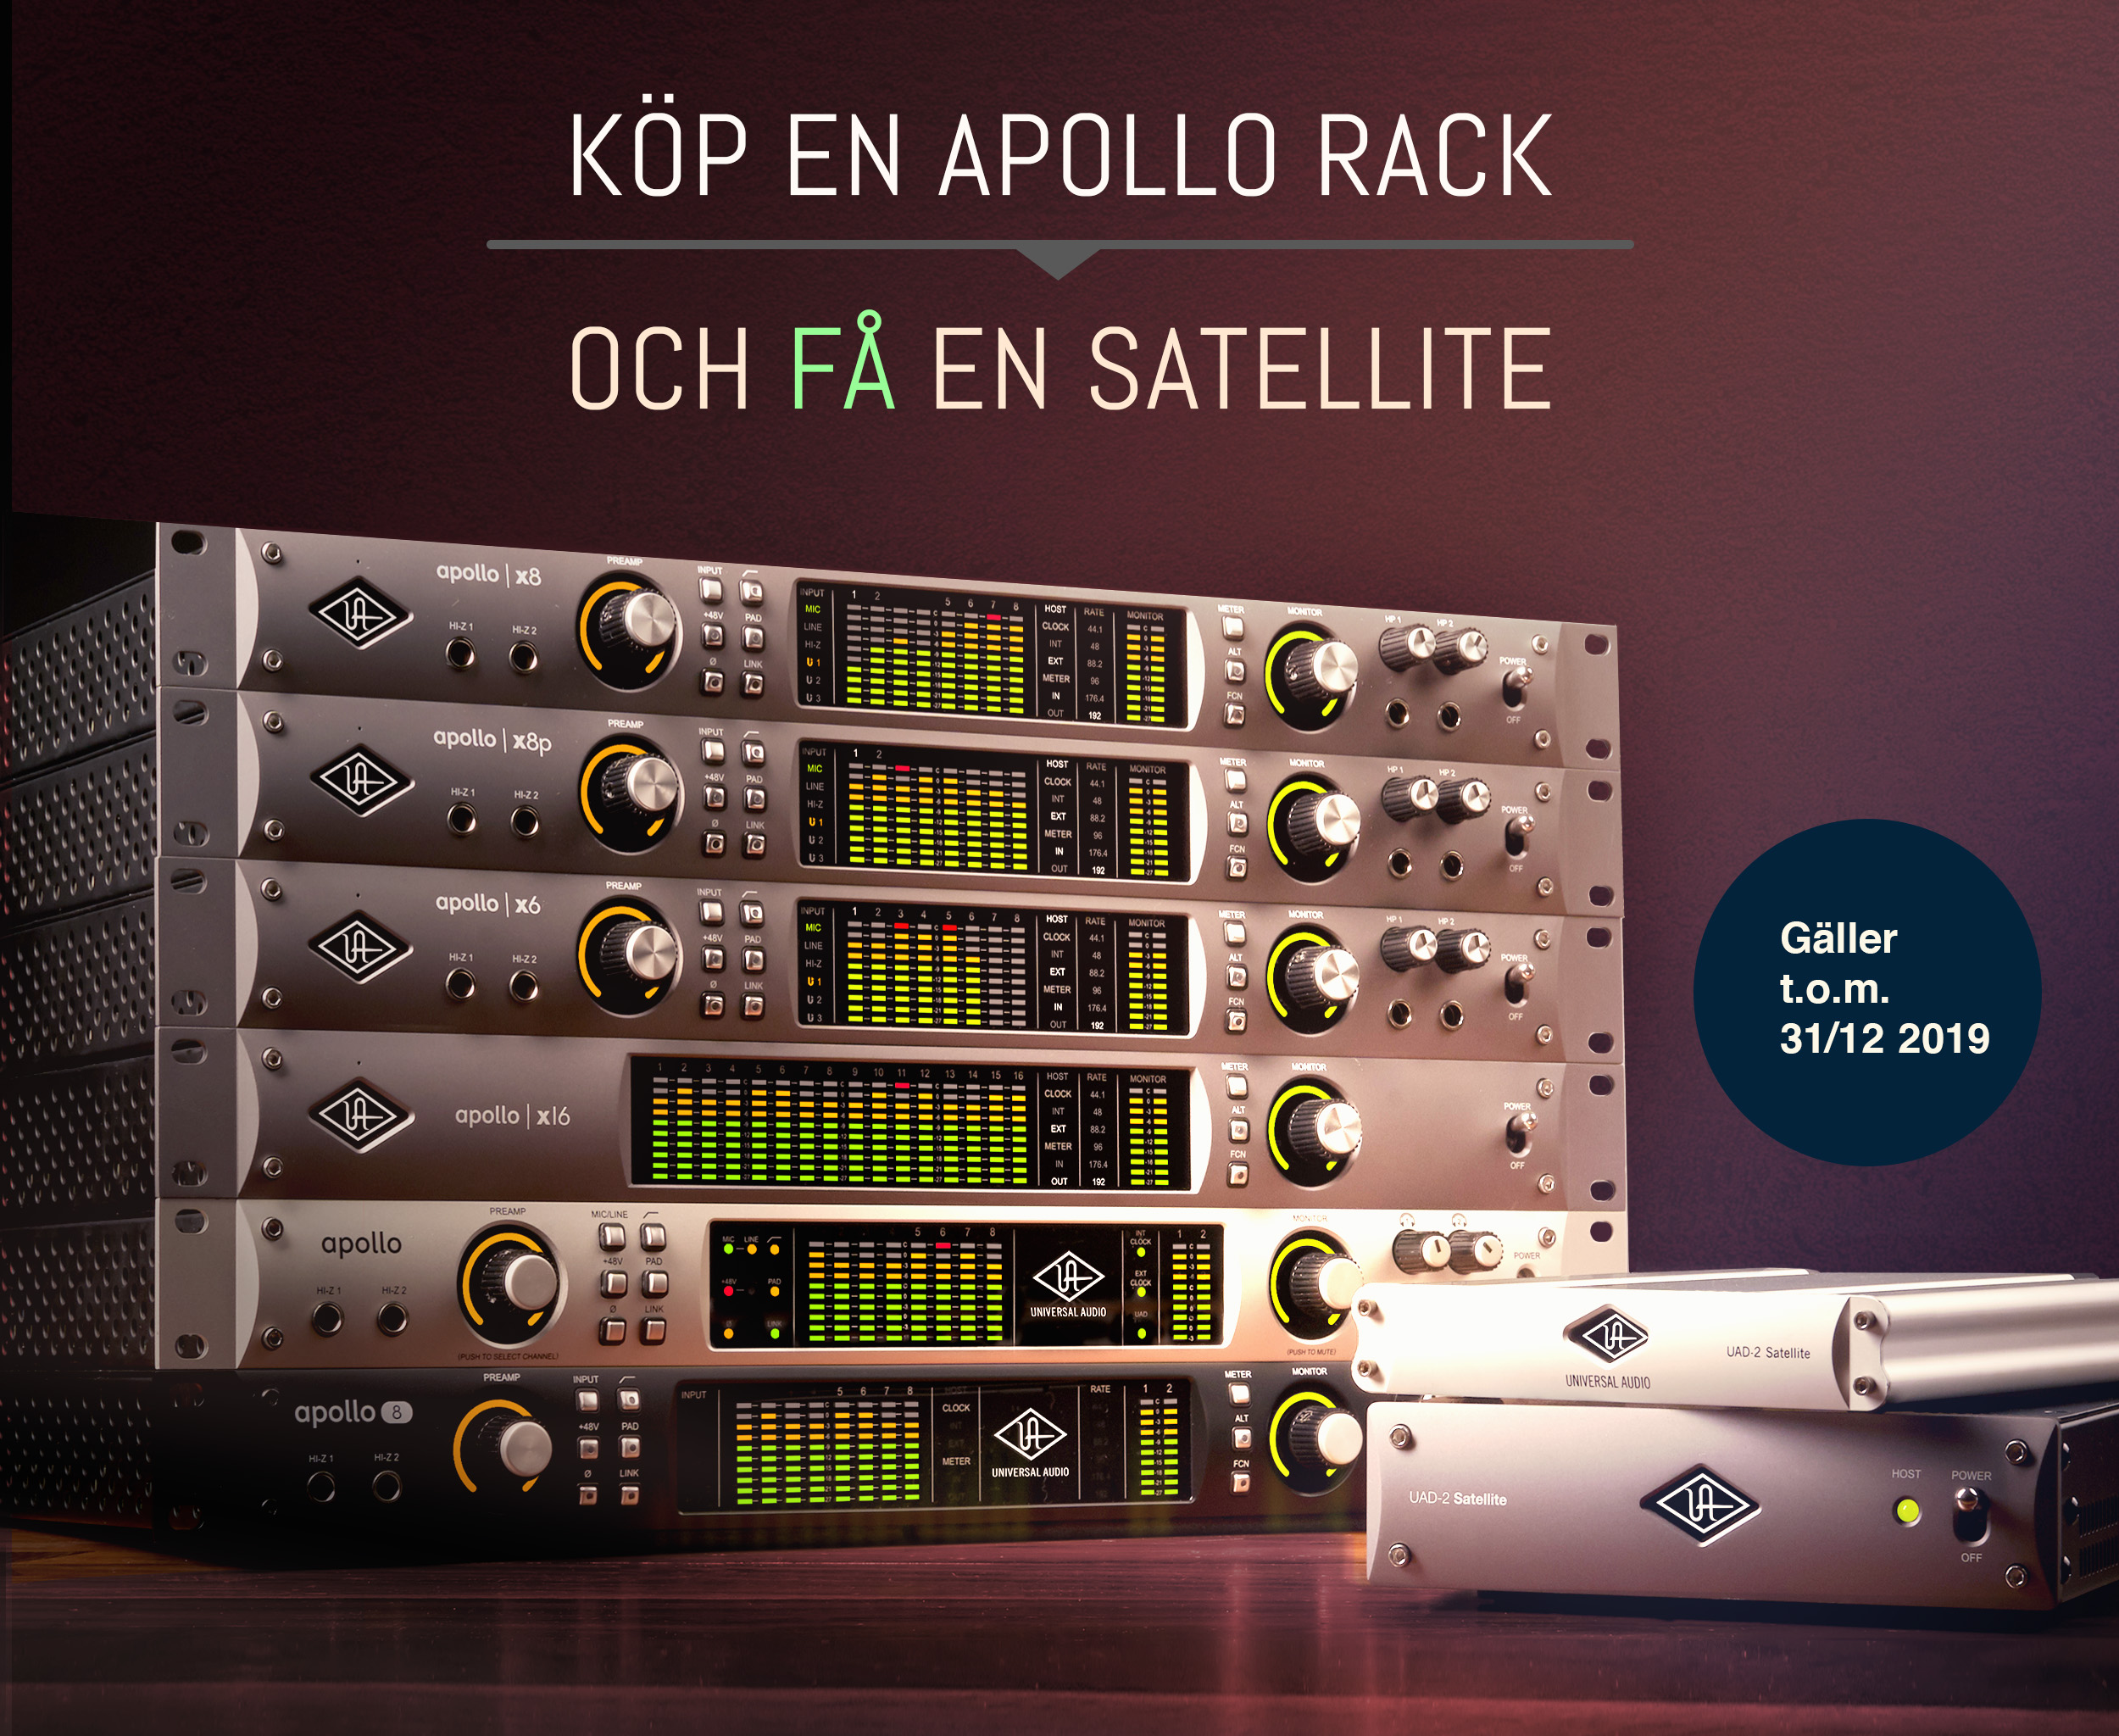 Universal Audio kampanj – Köp Apollo rack och få Satellite utan extra kostnad